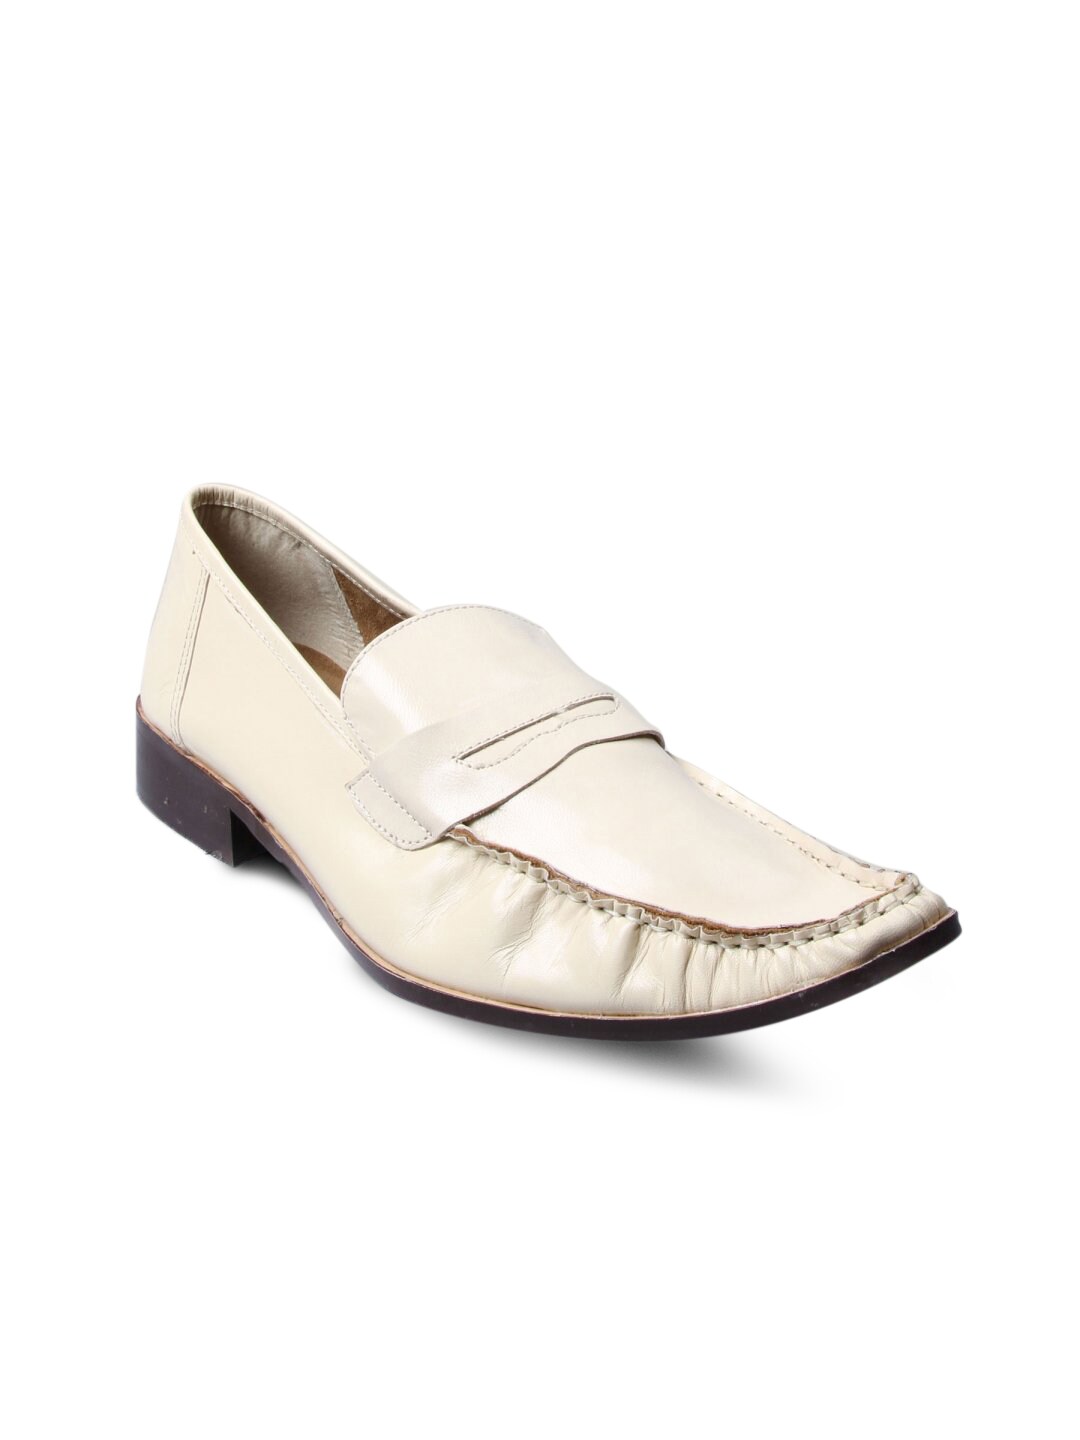 Carlton London Men's Casual Brown Shoe